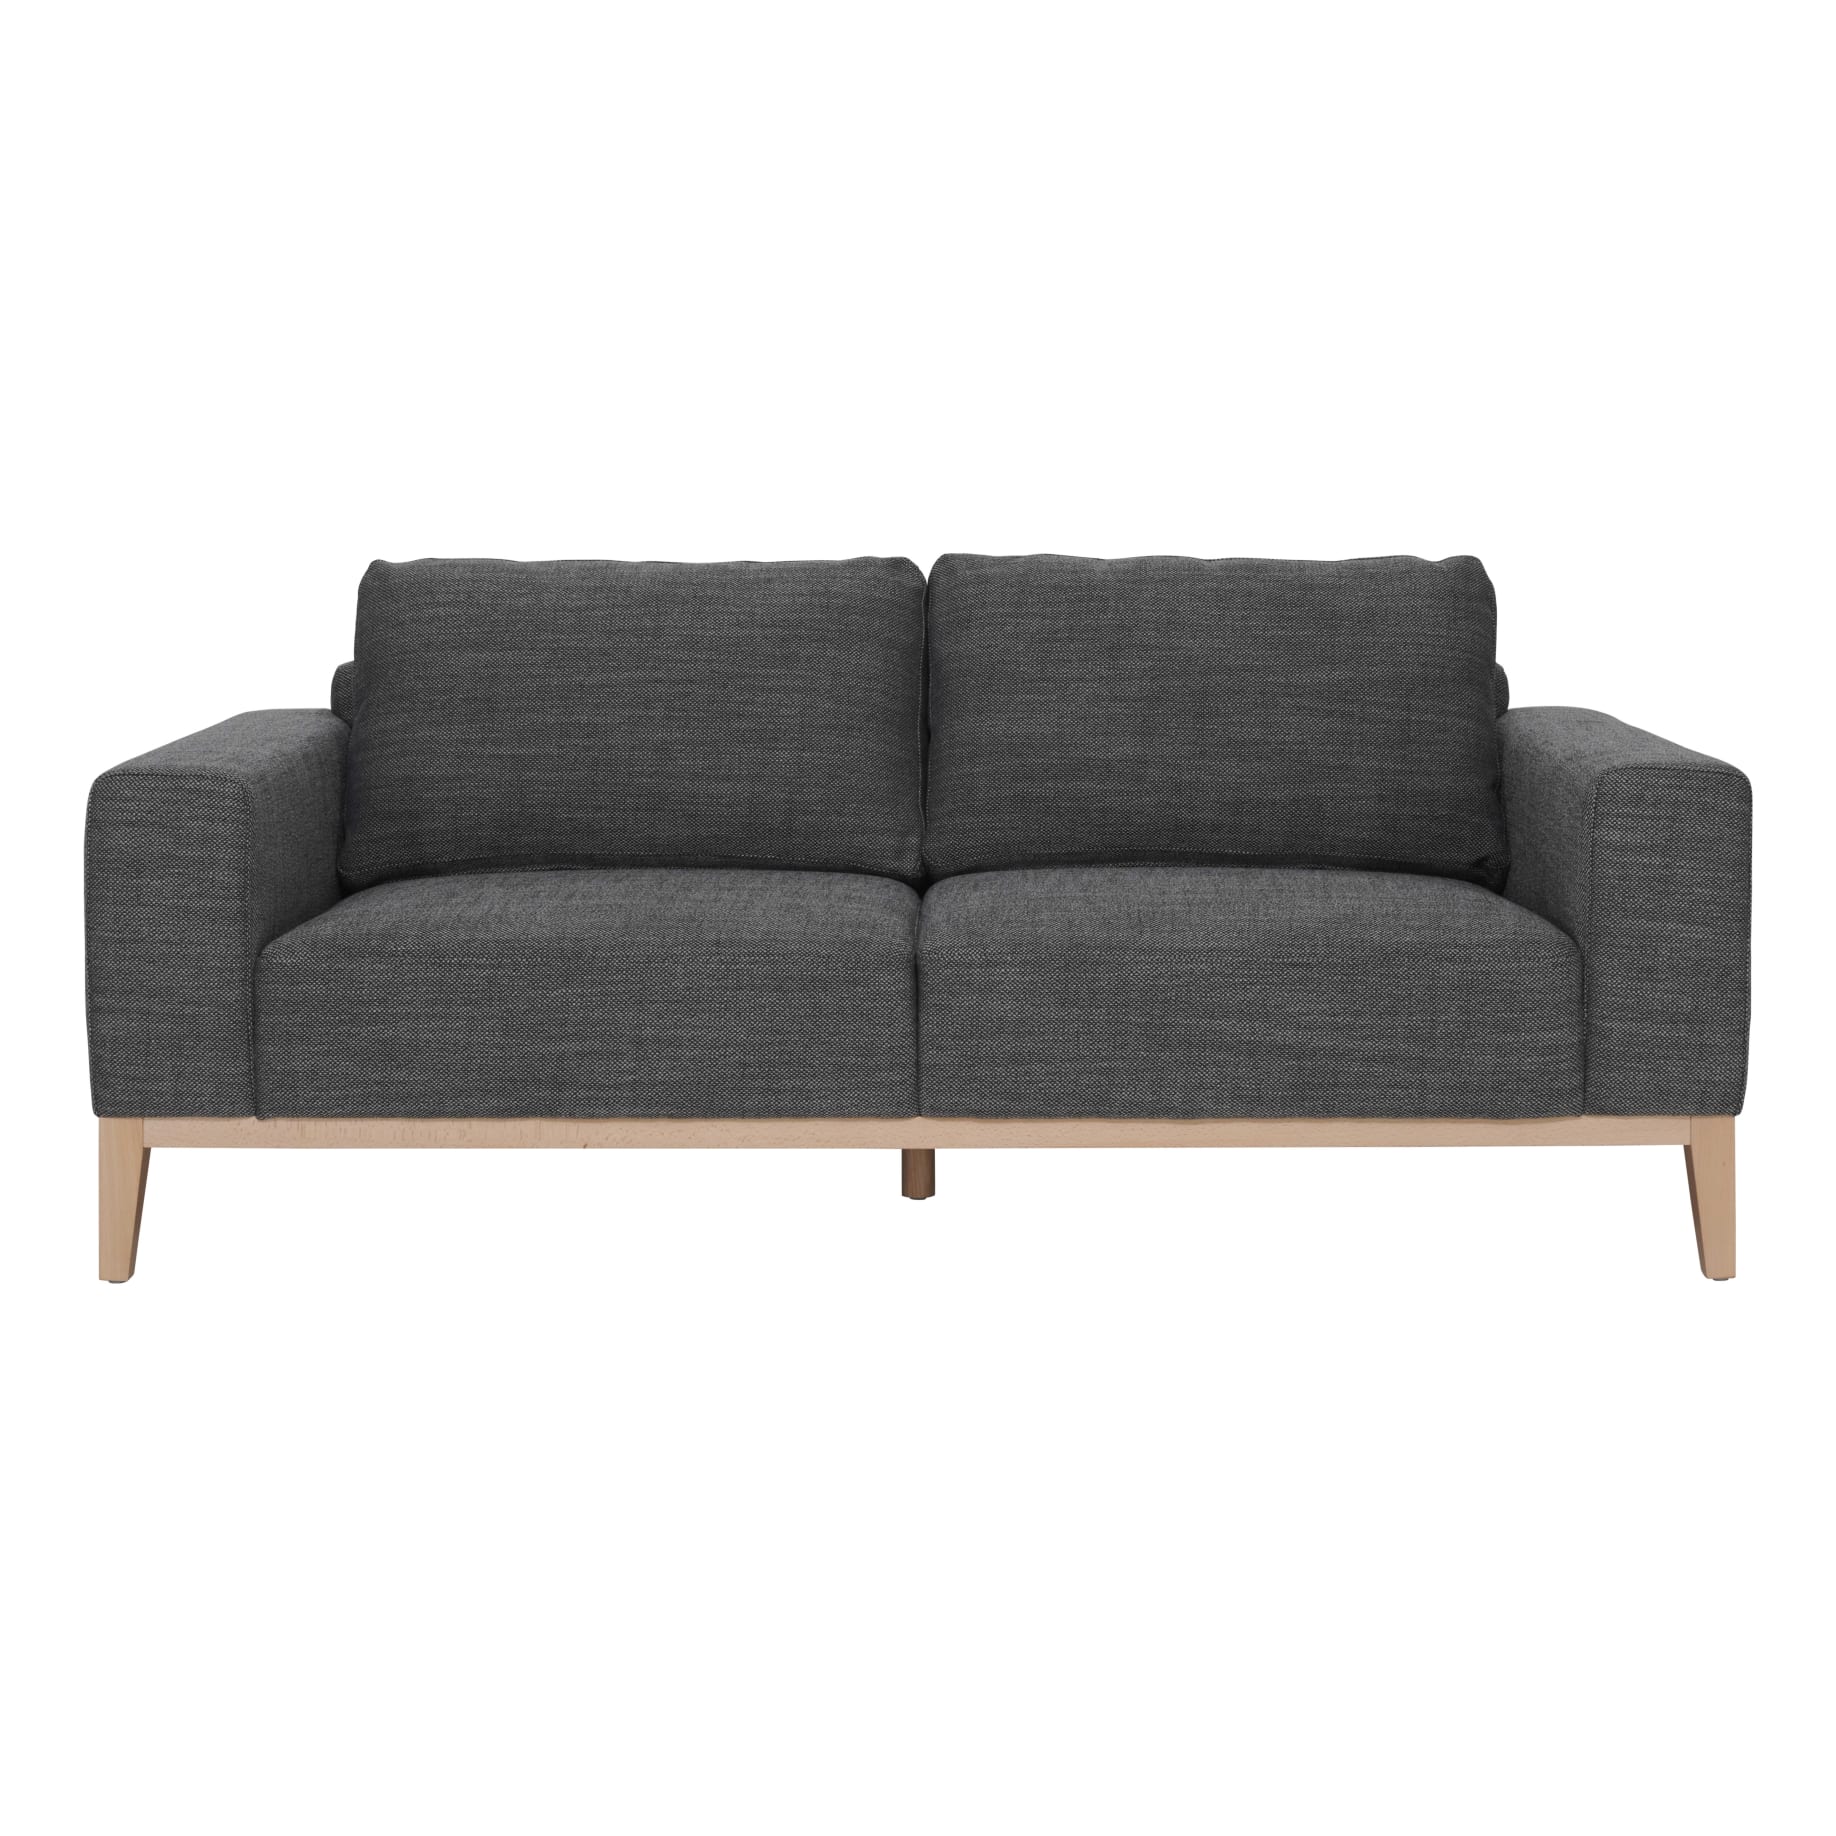 Moana 3 Seater Sofa in Kind Charcoal